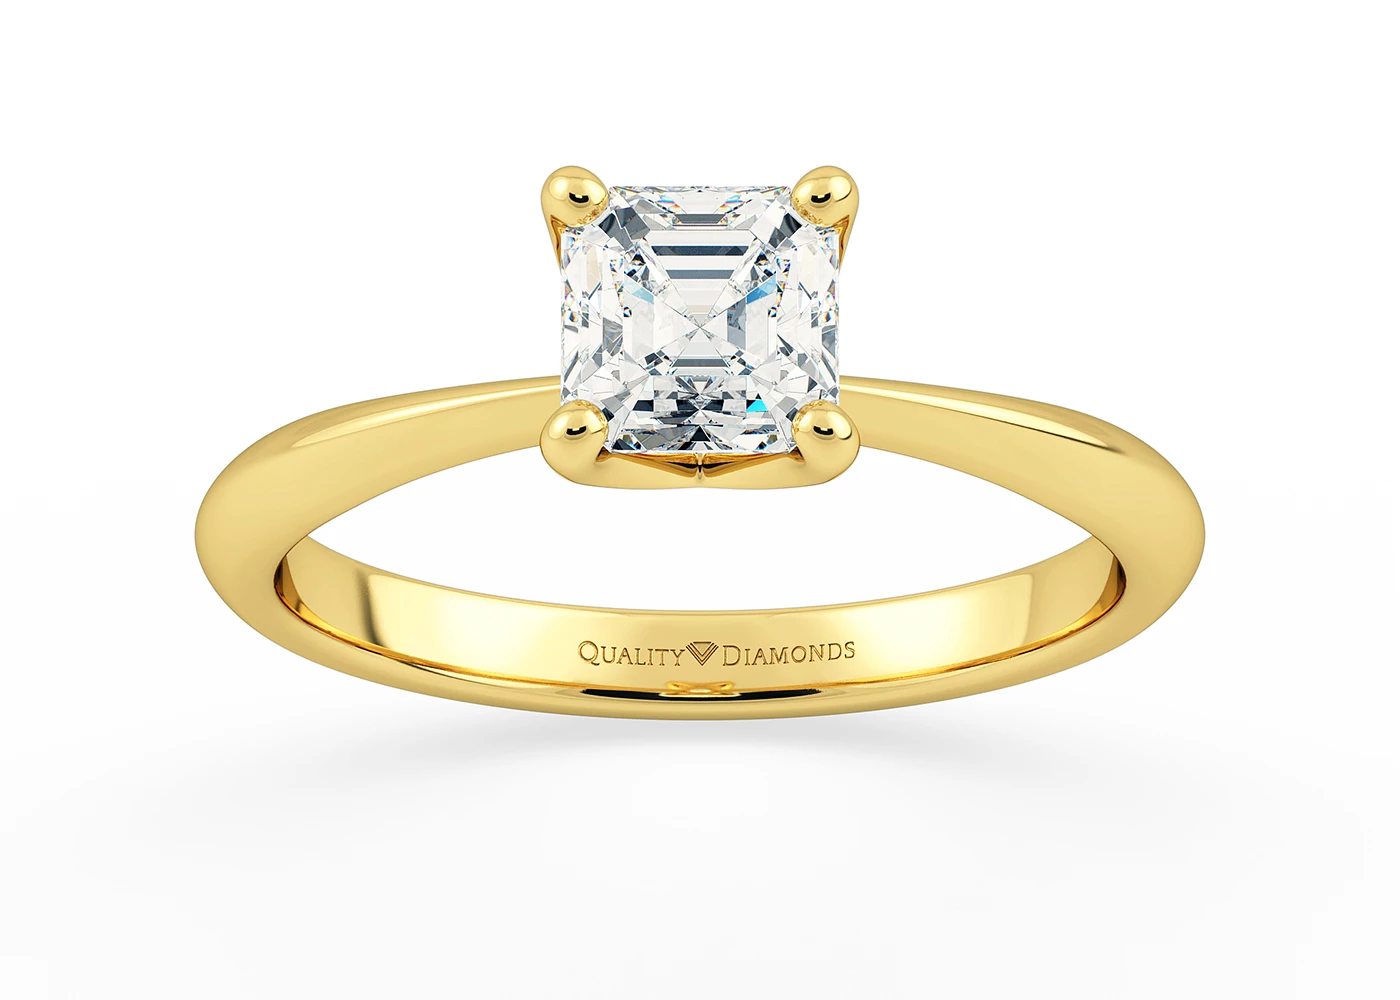 Asscher Amorette Diamond Ring in 9K Yellow Gold